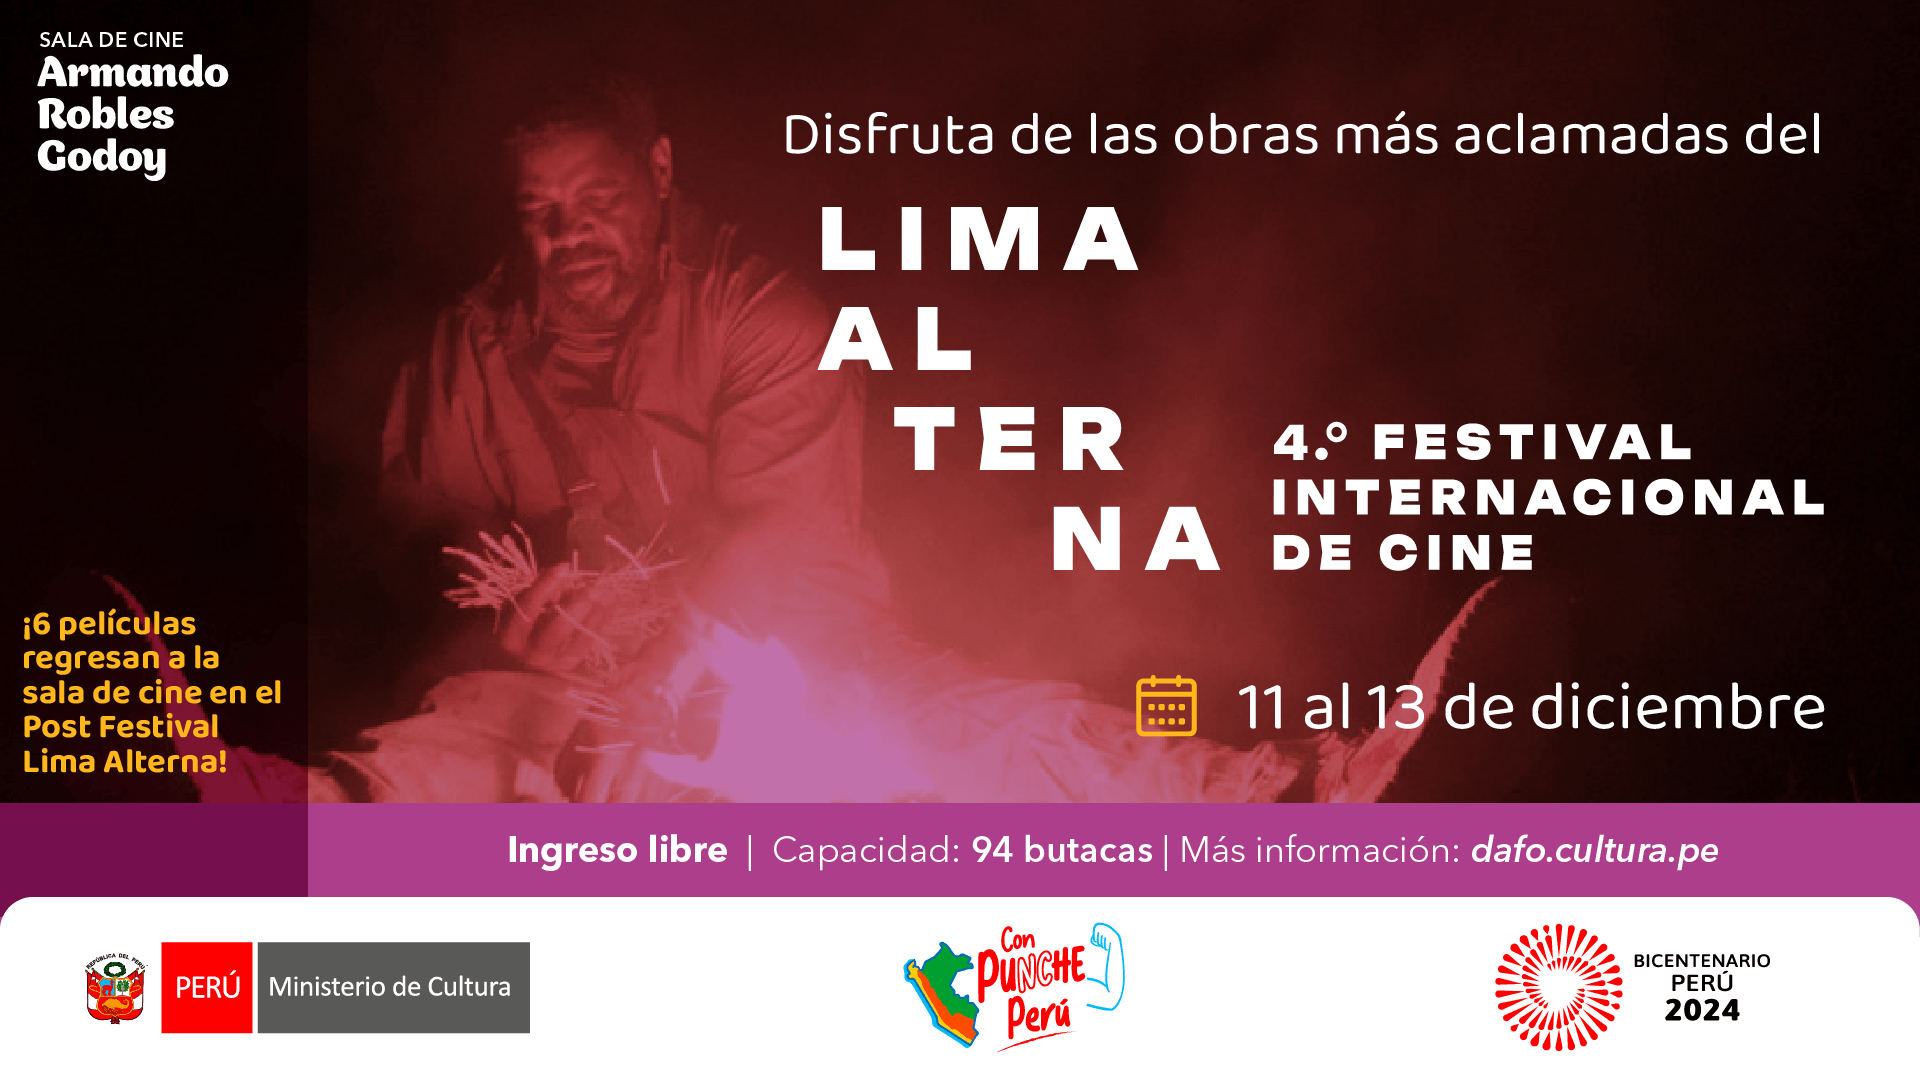 Post Festival - Lima Alterna, en la sala Armando Robles Godoy